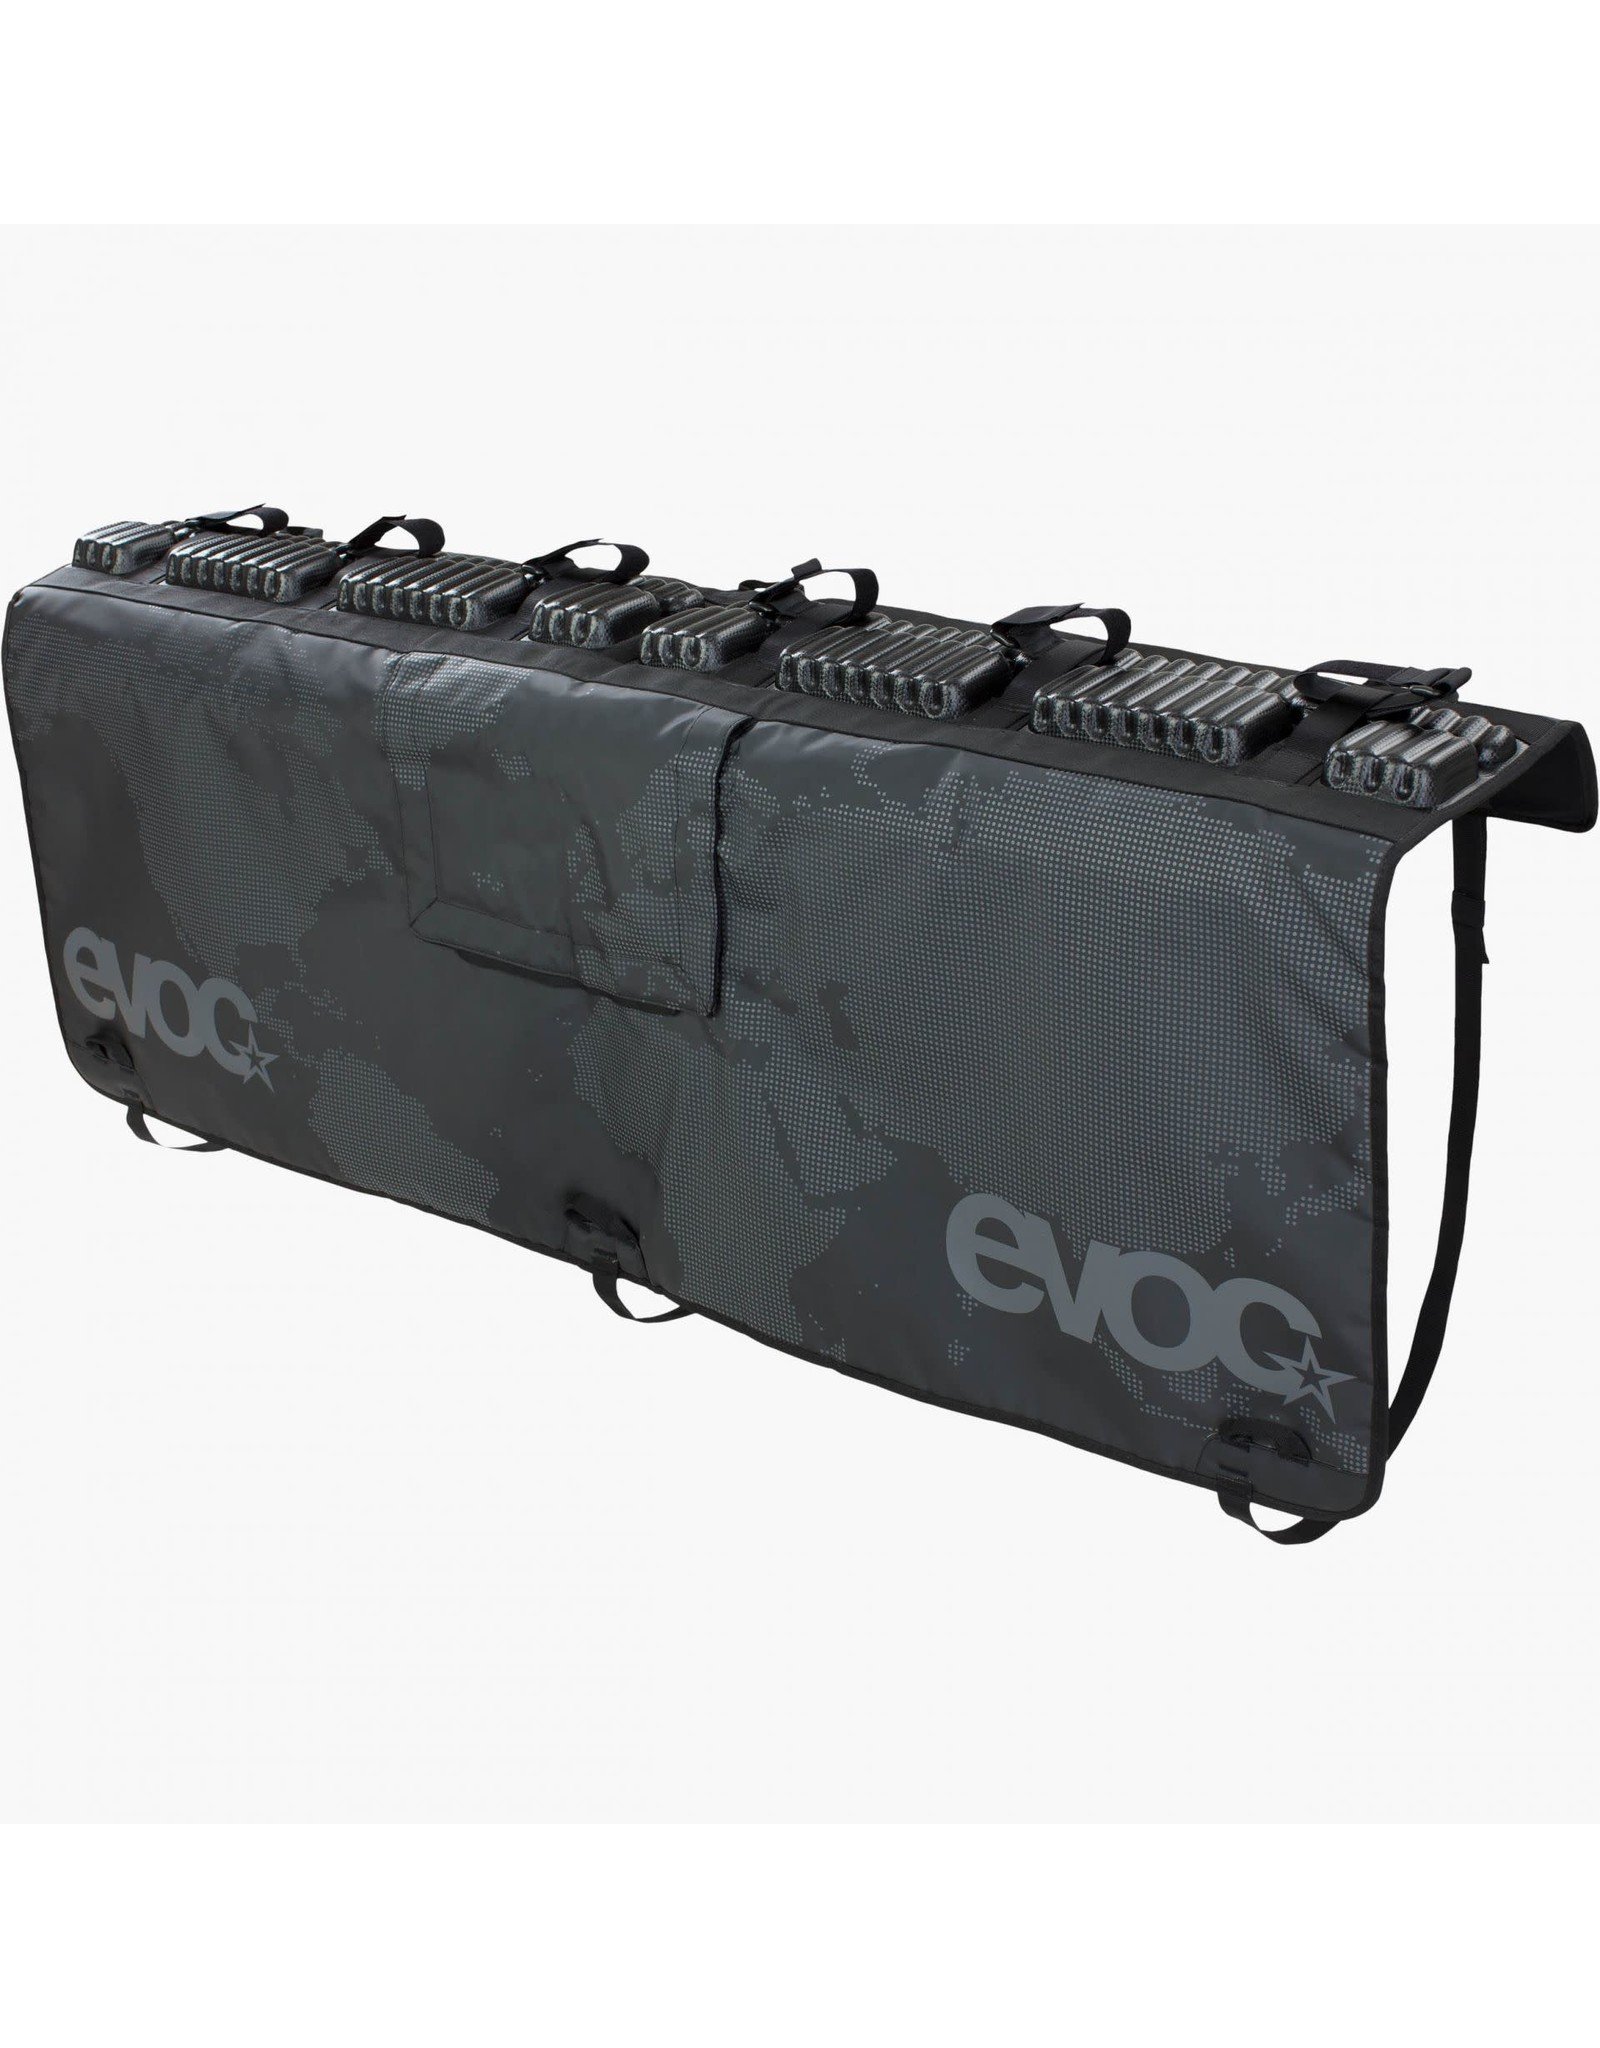 EVOC EVOC - Tailgate Pad M/L - 53" - Black